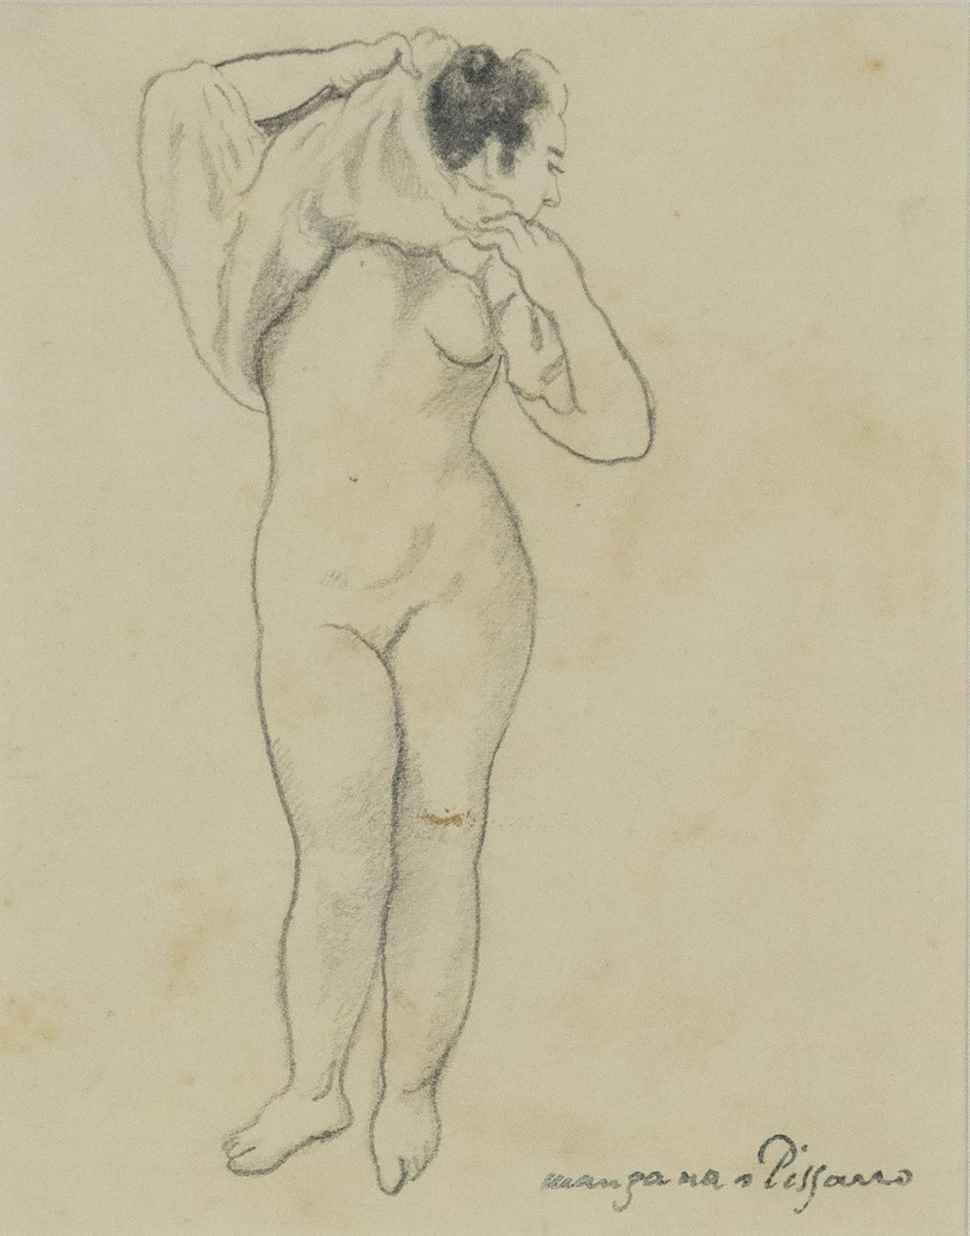 Undressing II - Georges Manzana Pissarro (1871 - 1961)